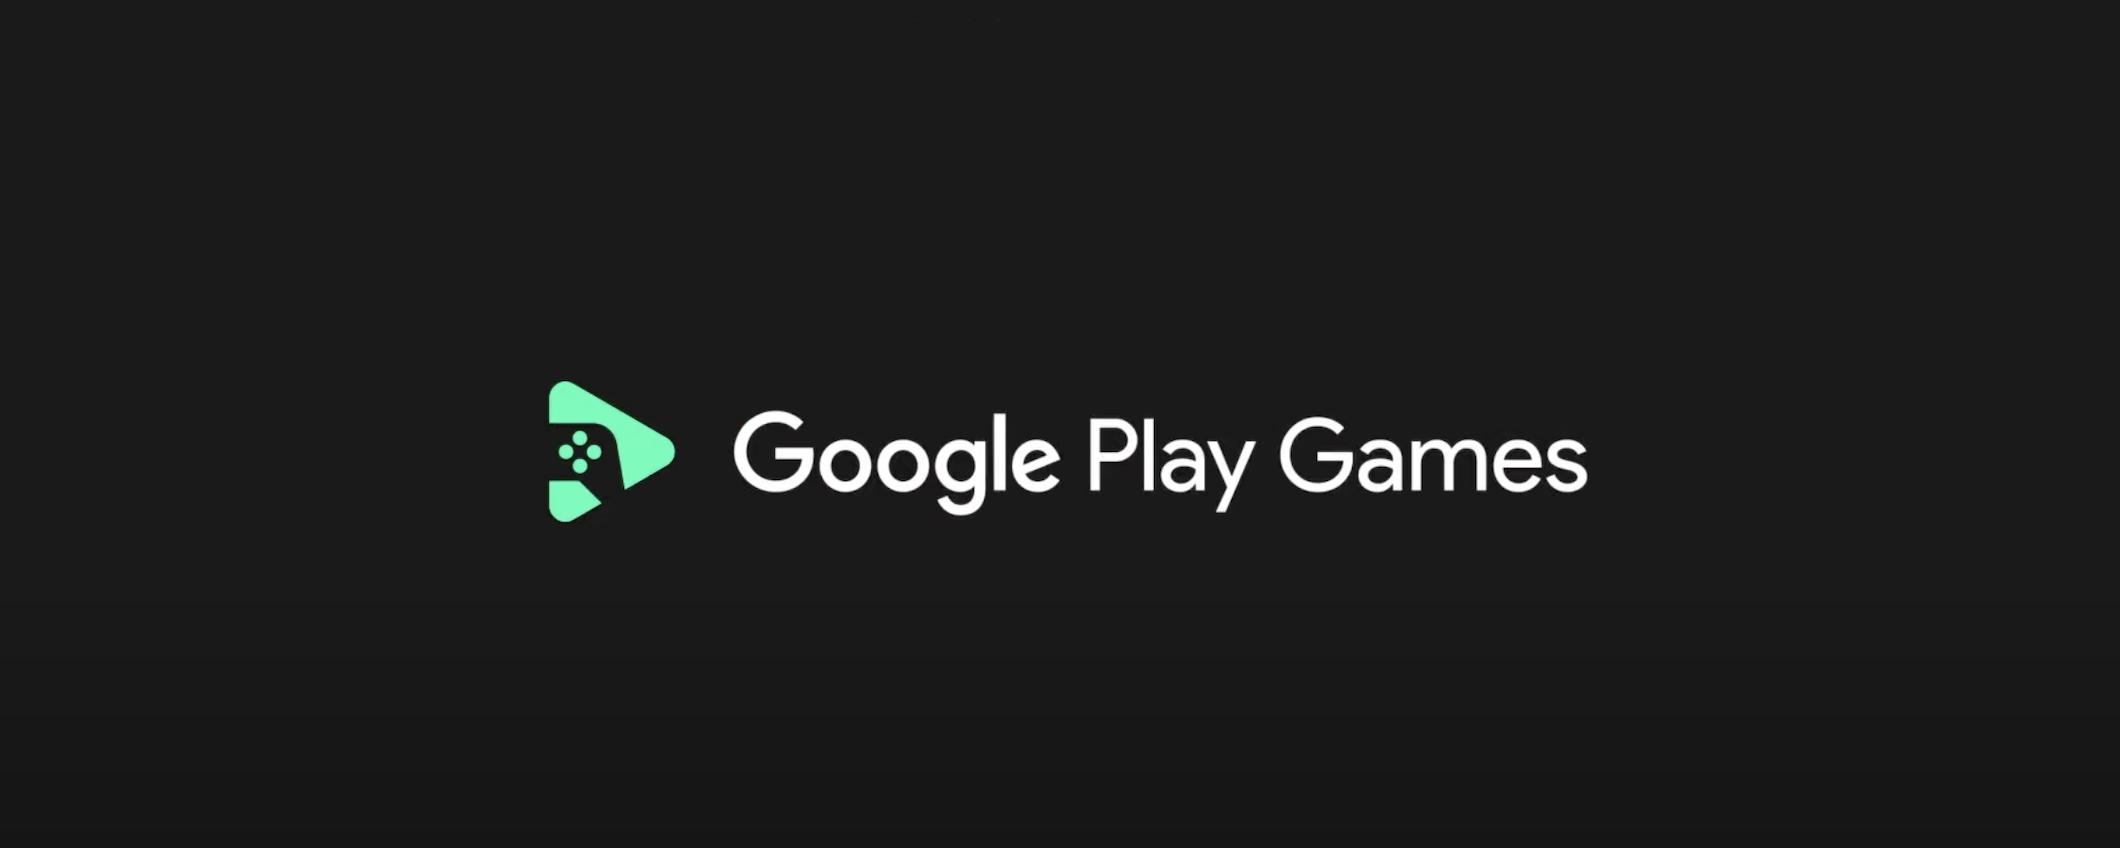 Google Play Games per Windows anche in Europa